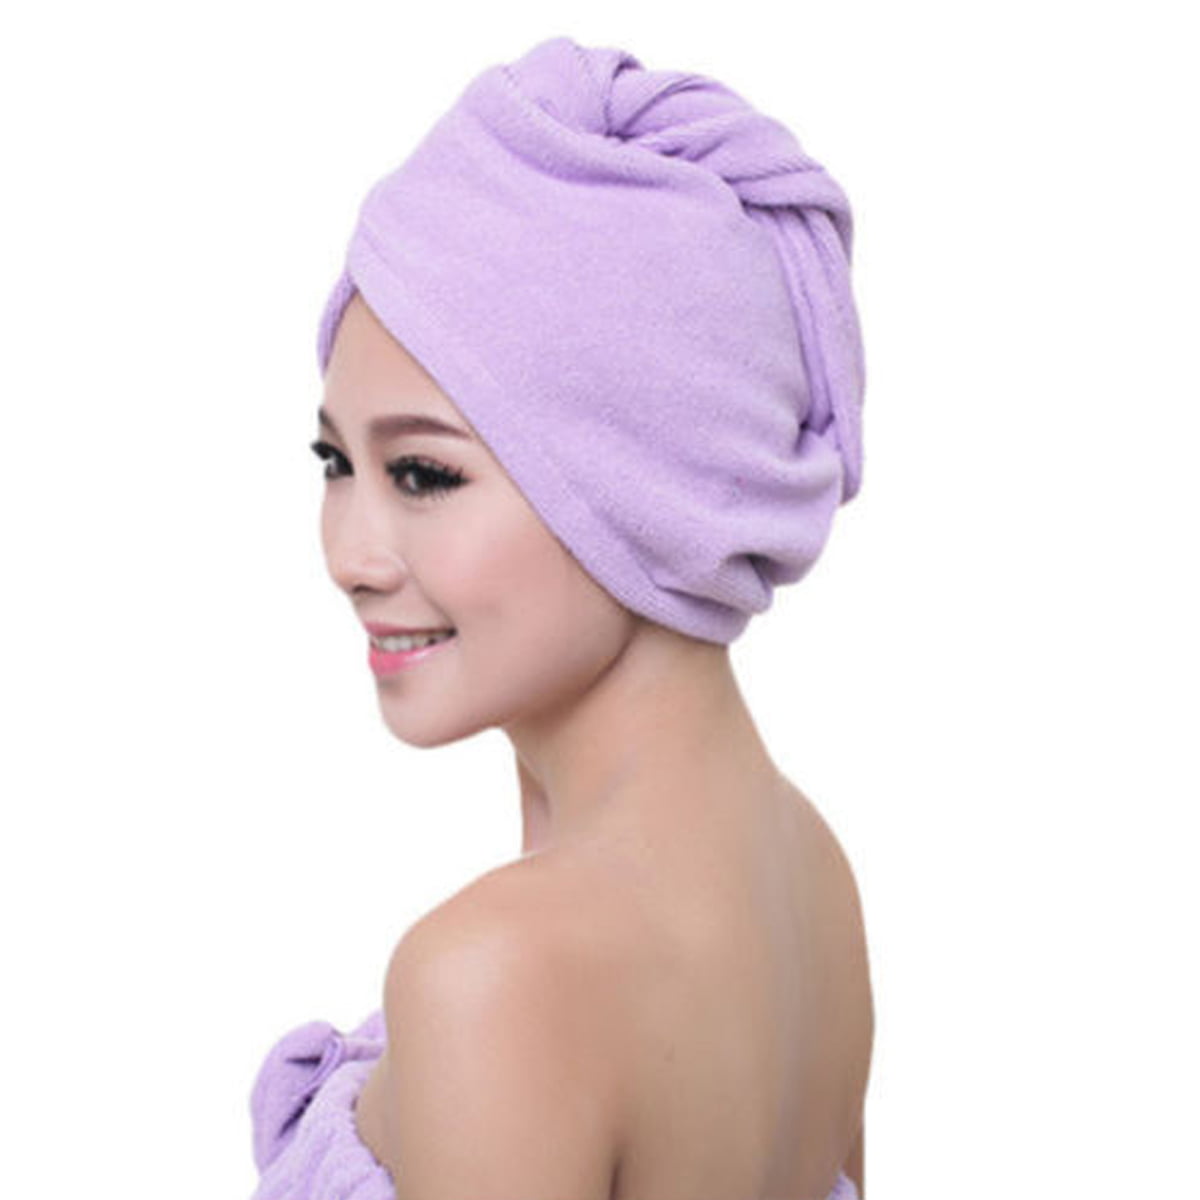 NEW Microfiber Towel Quick Dry Hair Magic Drying Turban Wrap Hat Cap Shower 